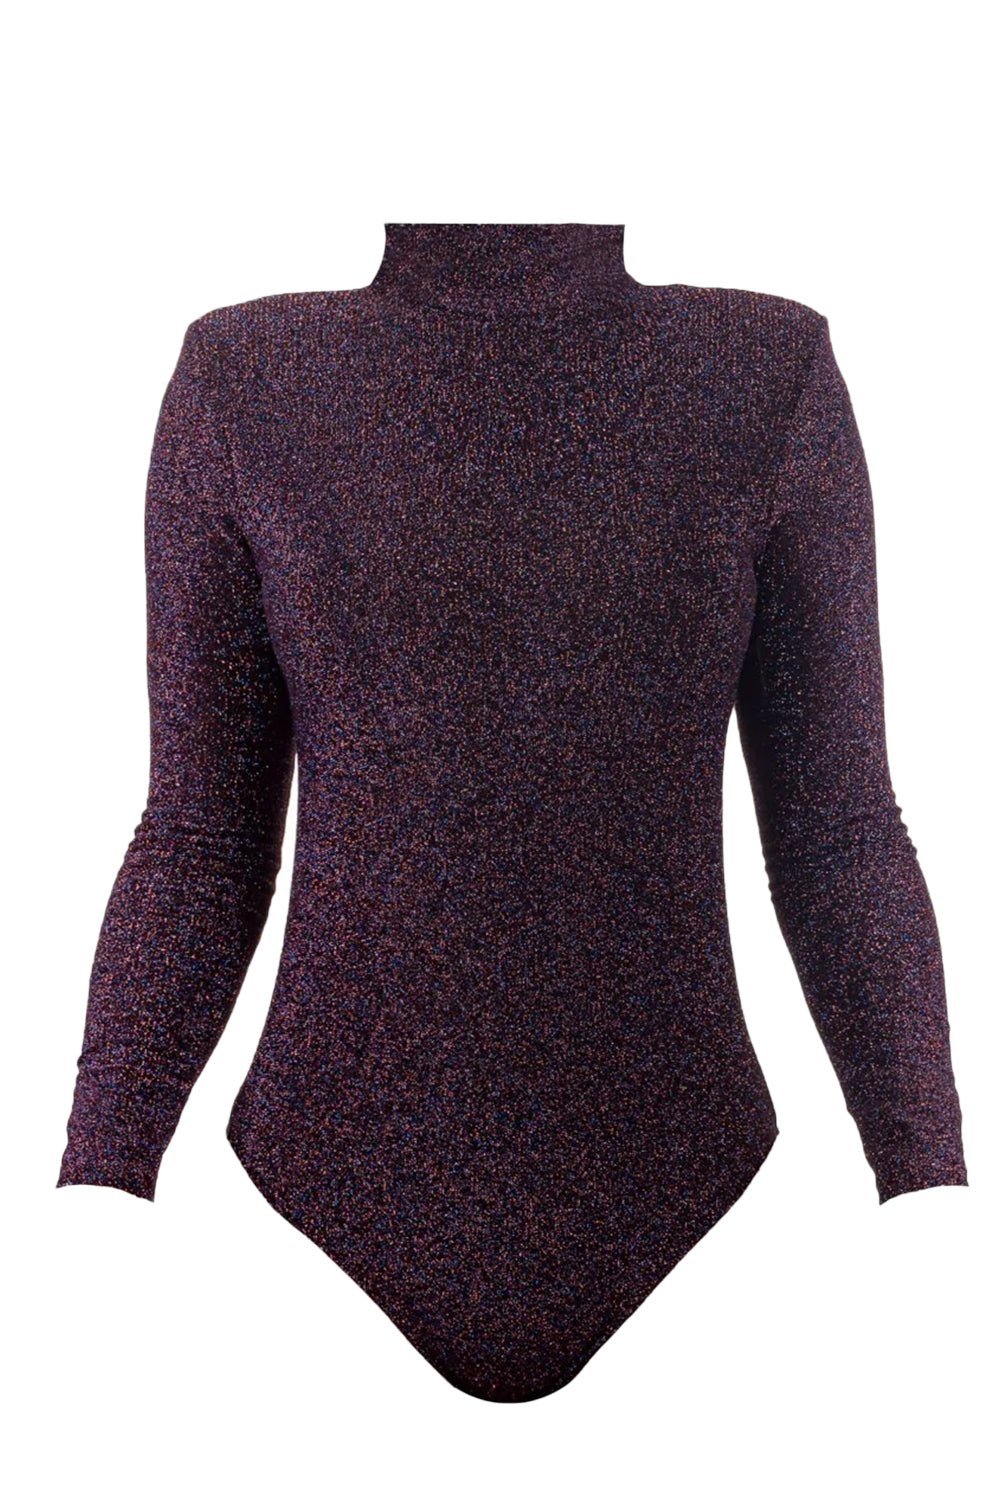 Taylor Glitter Purple Bodysuit